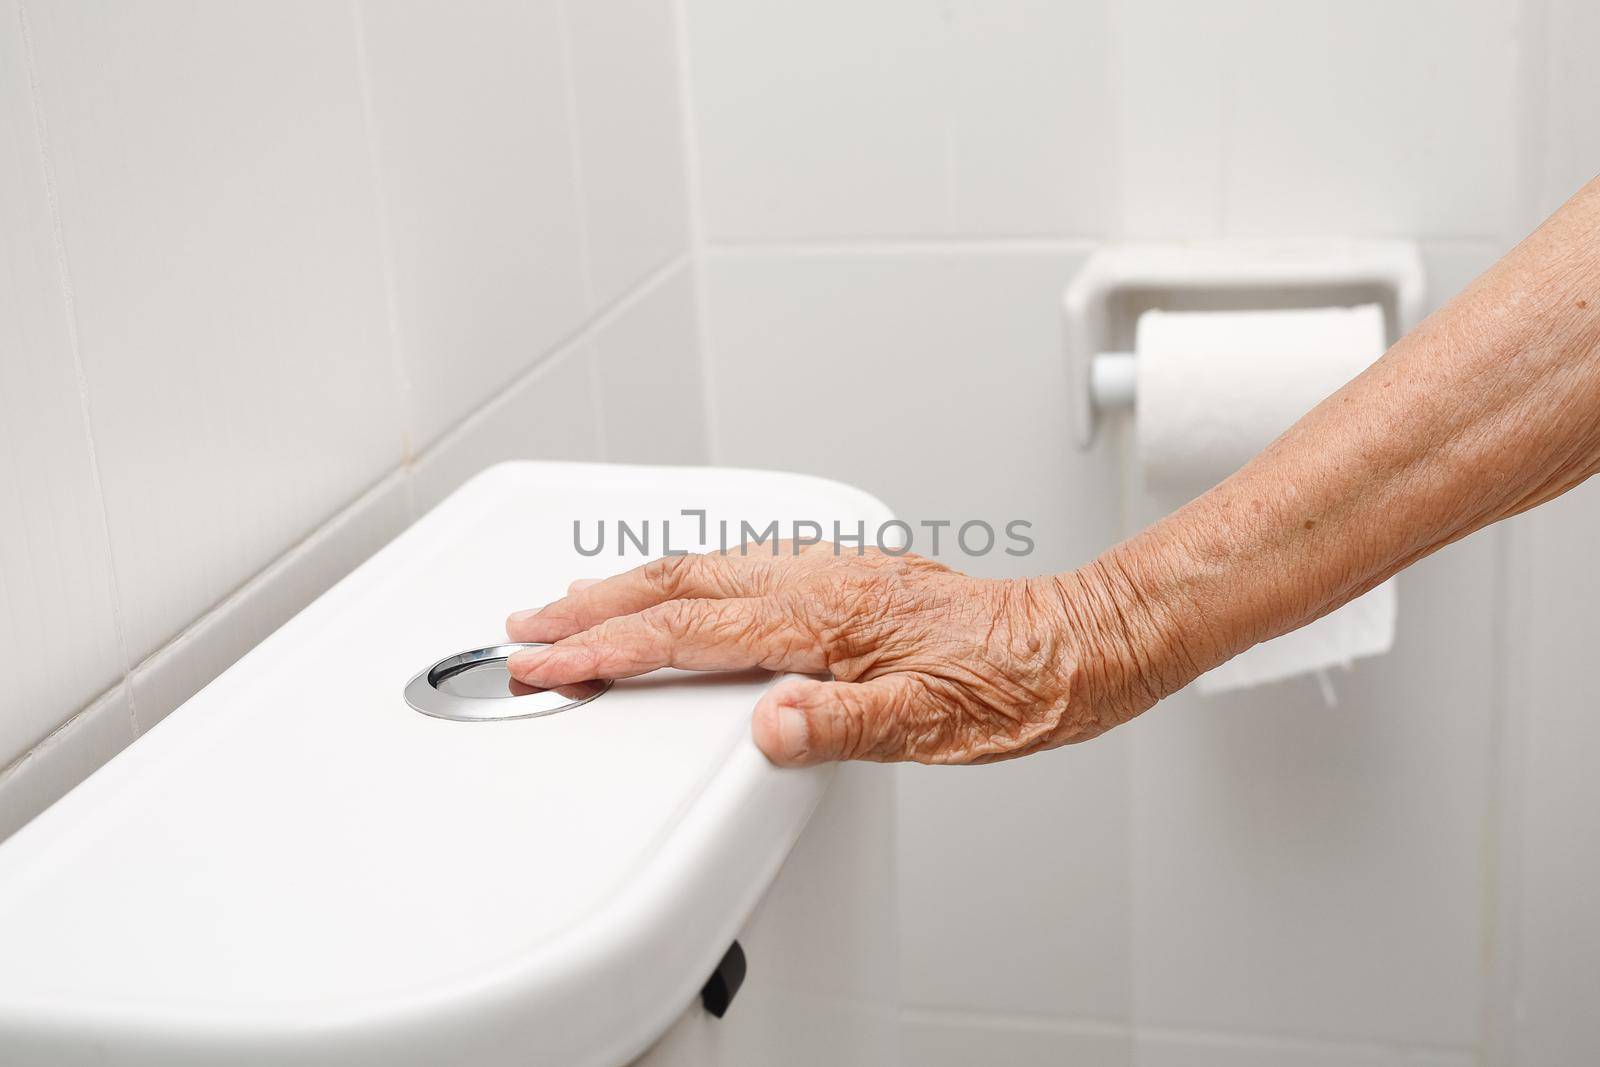 Elderly woman hand flushing toilet